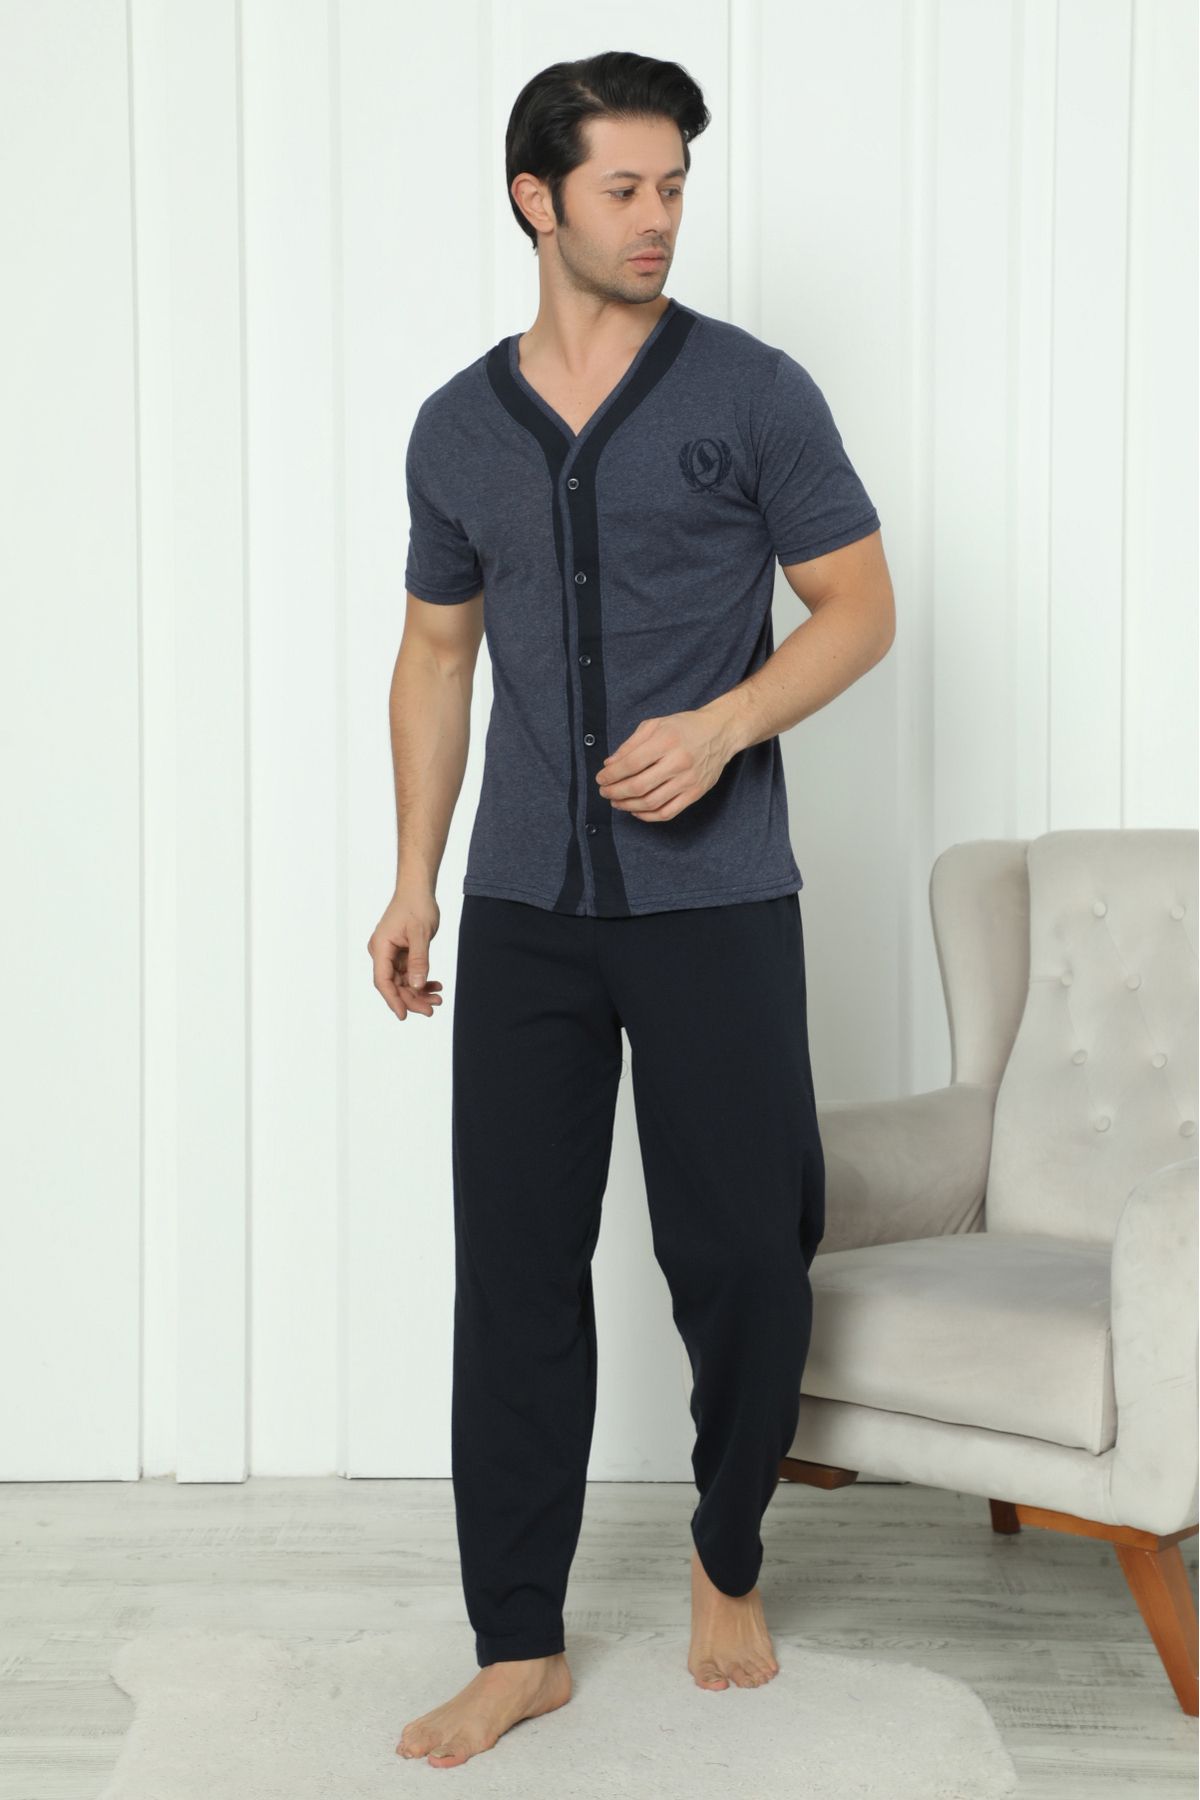 Wordex Flk 8180 Pamuklu Penye Erkek Düğmeli Kısa Kollu Pijama Takımı